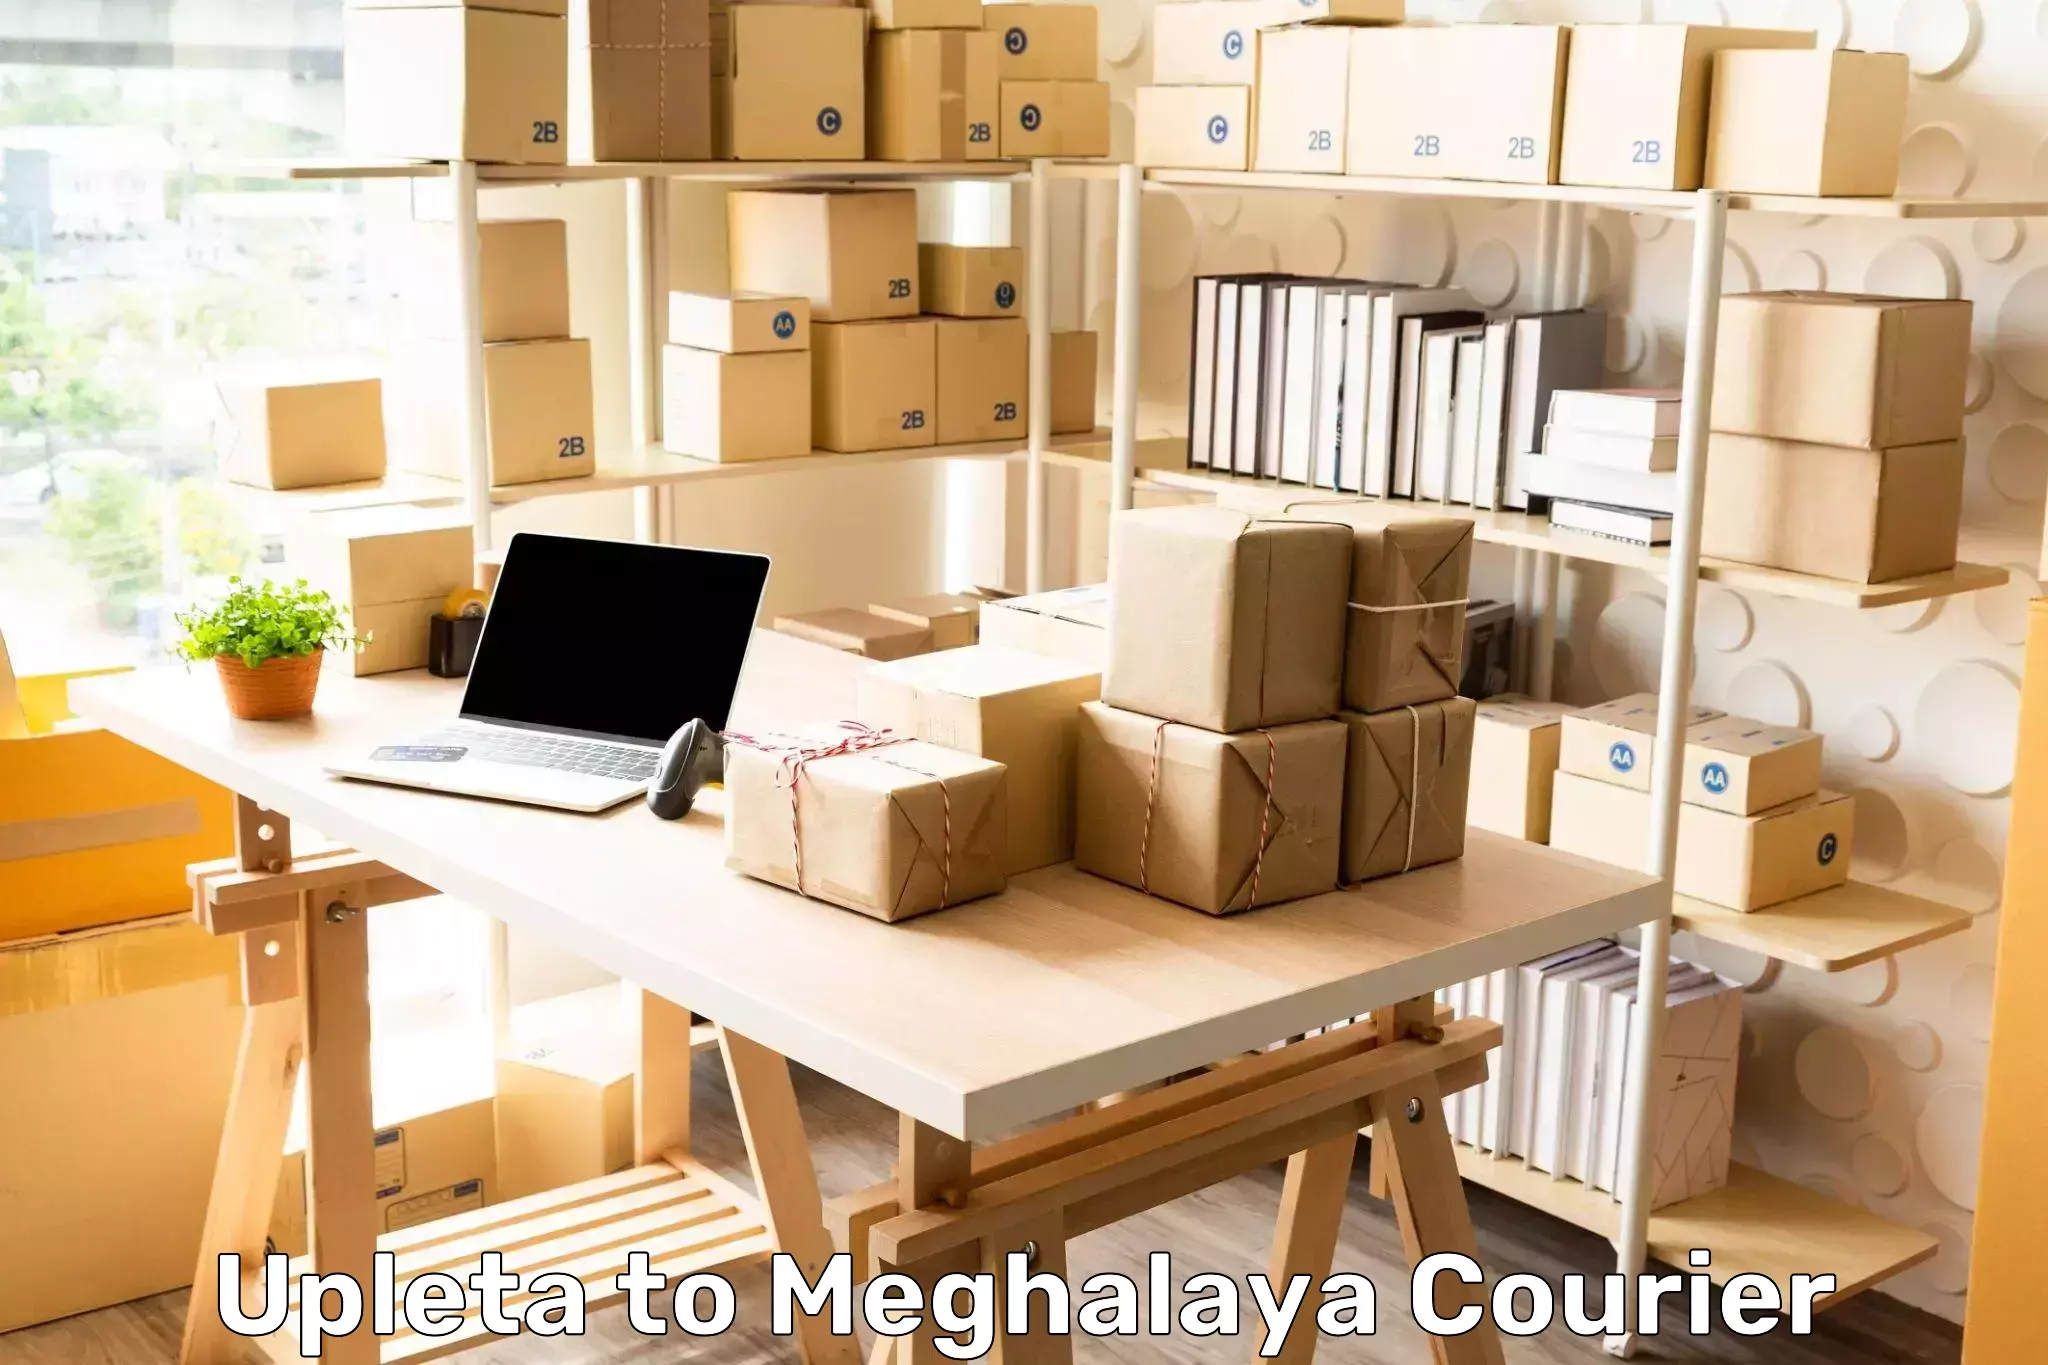 Delivery service partnership Upleta to Meghalaya